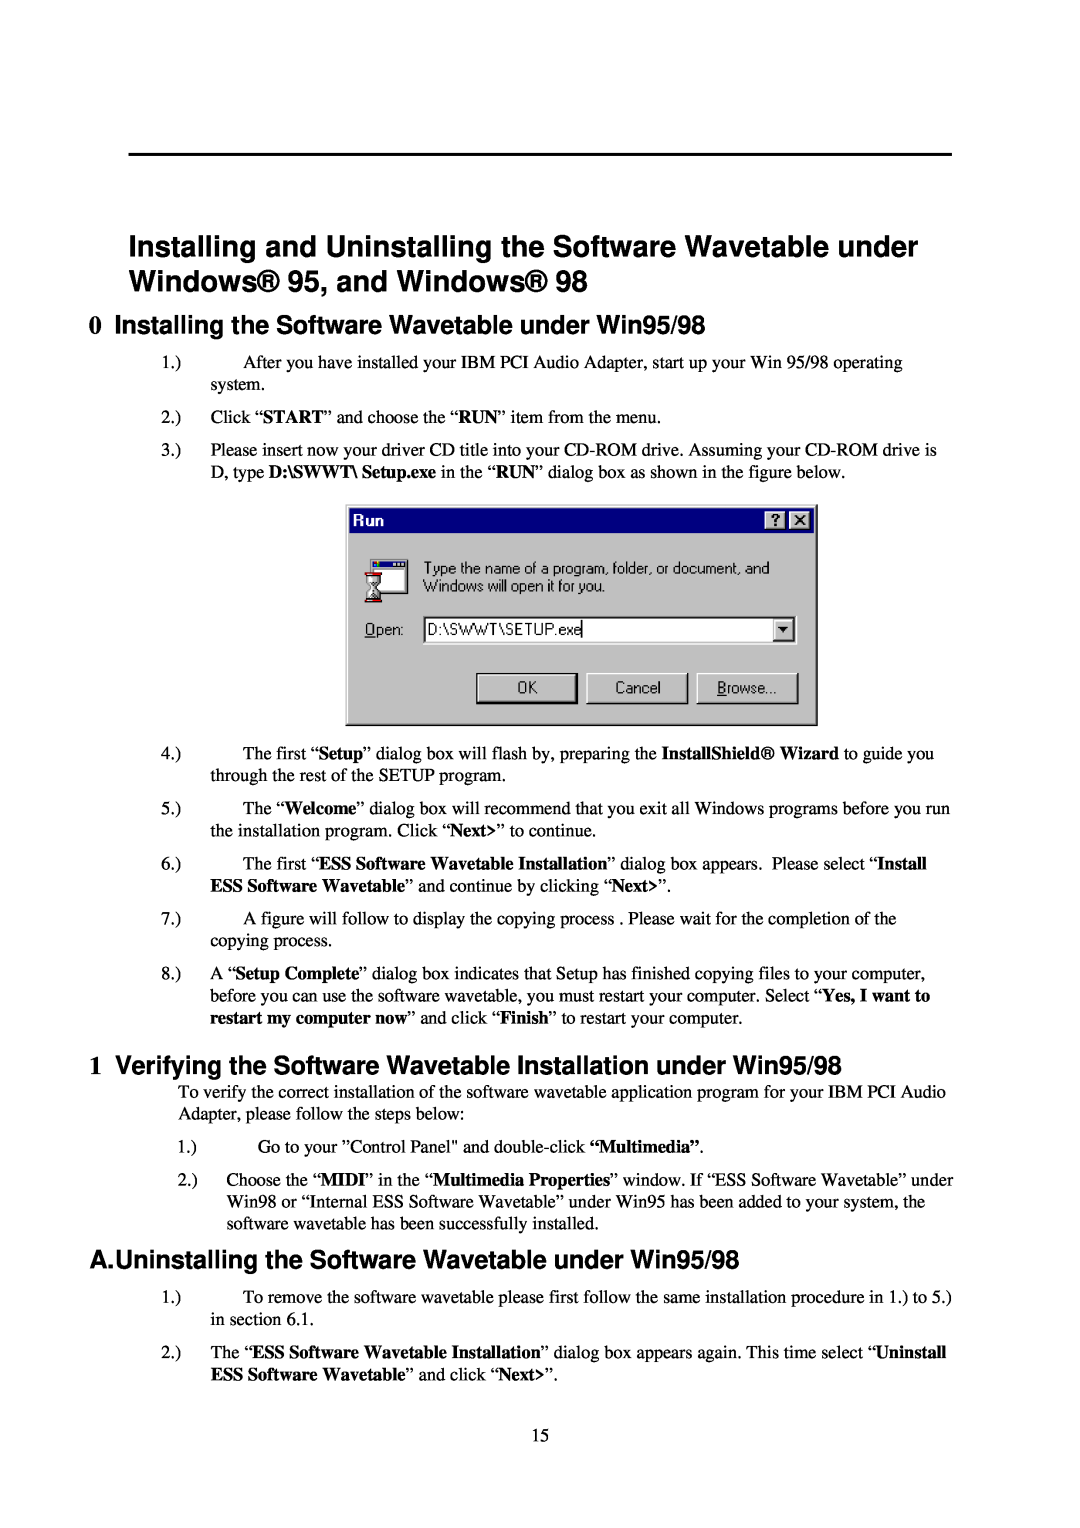 IBM L70 Installing the Software Wavetable under Win95/98, Verifying the Software Wavetable Installation under Win95/98 